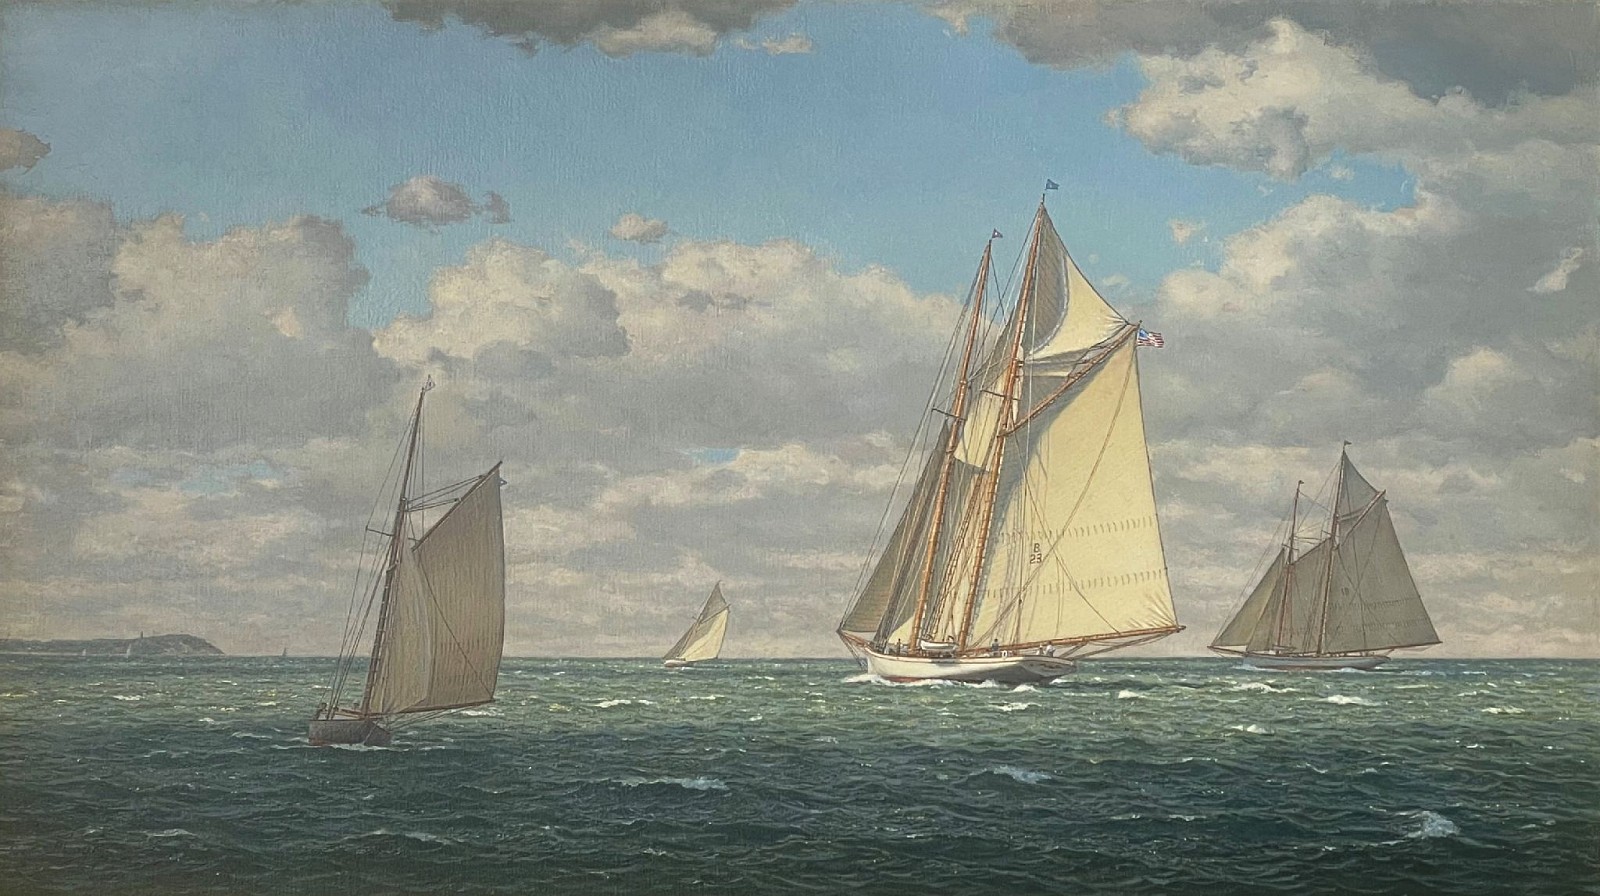 Richard Loud, Schooner Yacht America, Gay Head, Martha’s Vineyard, c. 1893
oil on canvas, 25 x 44 in. (63.5 x 111.8 cm)
RL240402